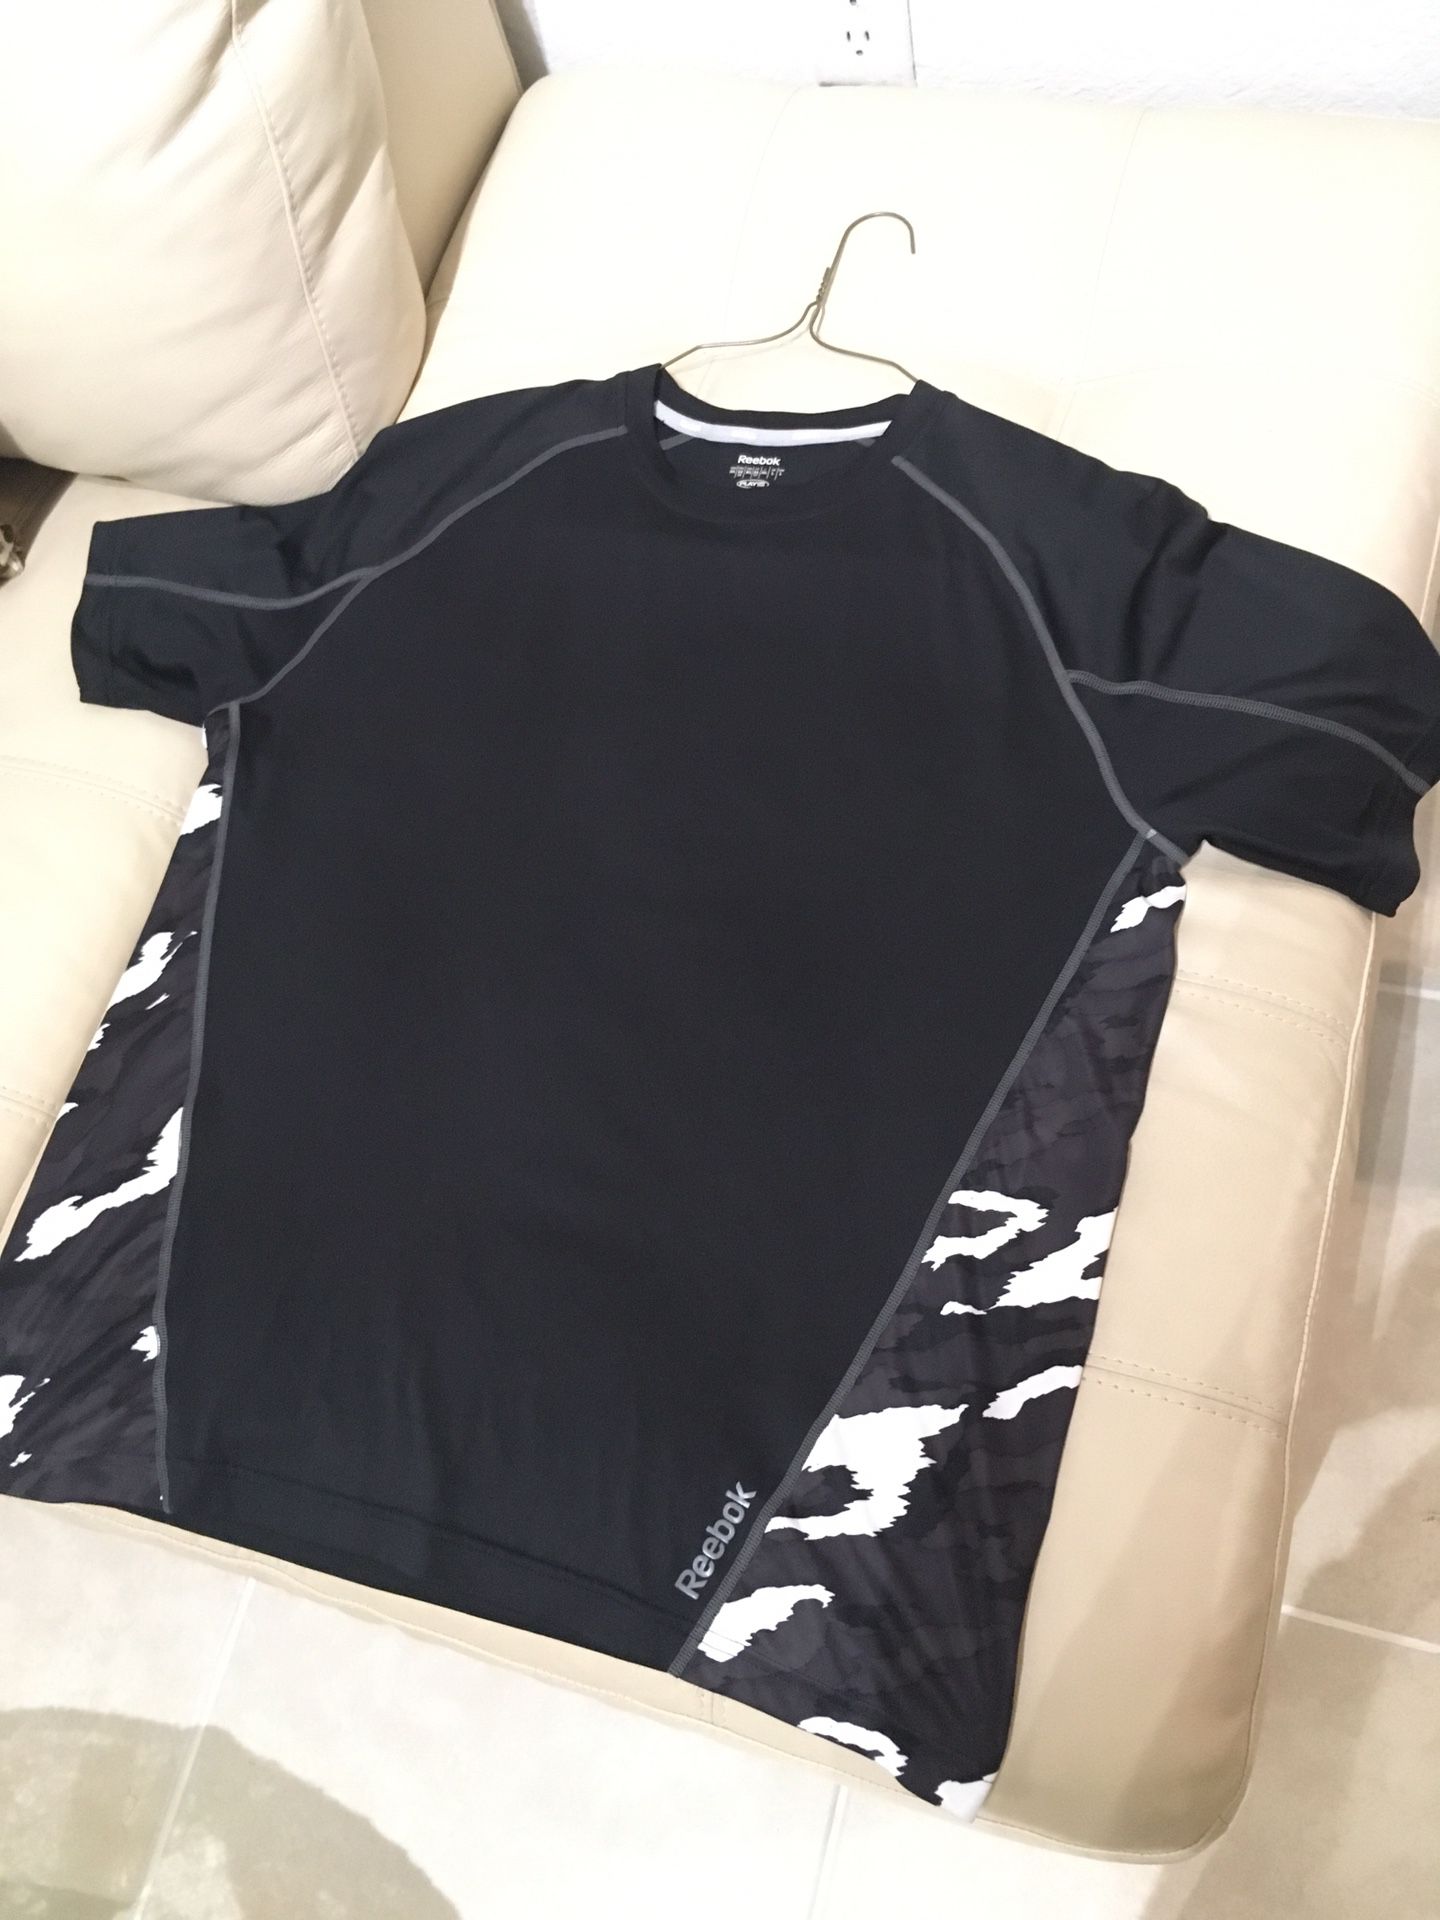 Reebok Men’s Black Camo Short Sleeve Play Dry T-Shirt Size Large L